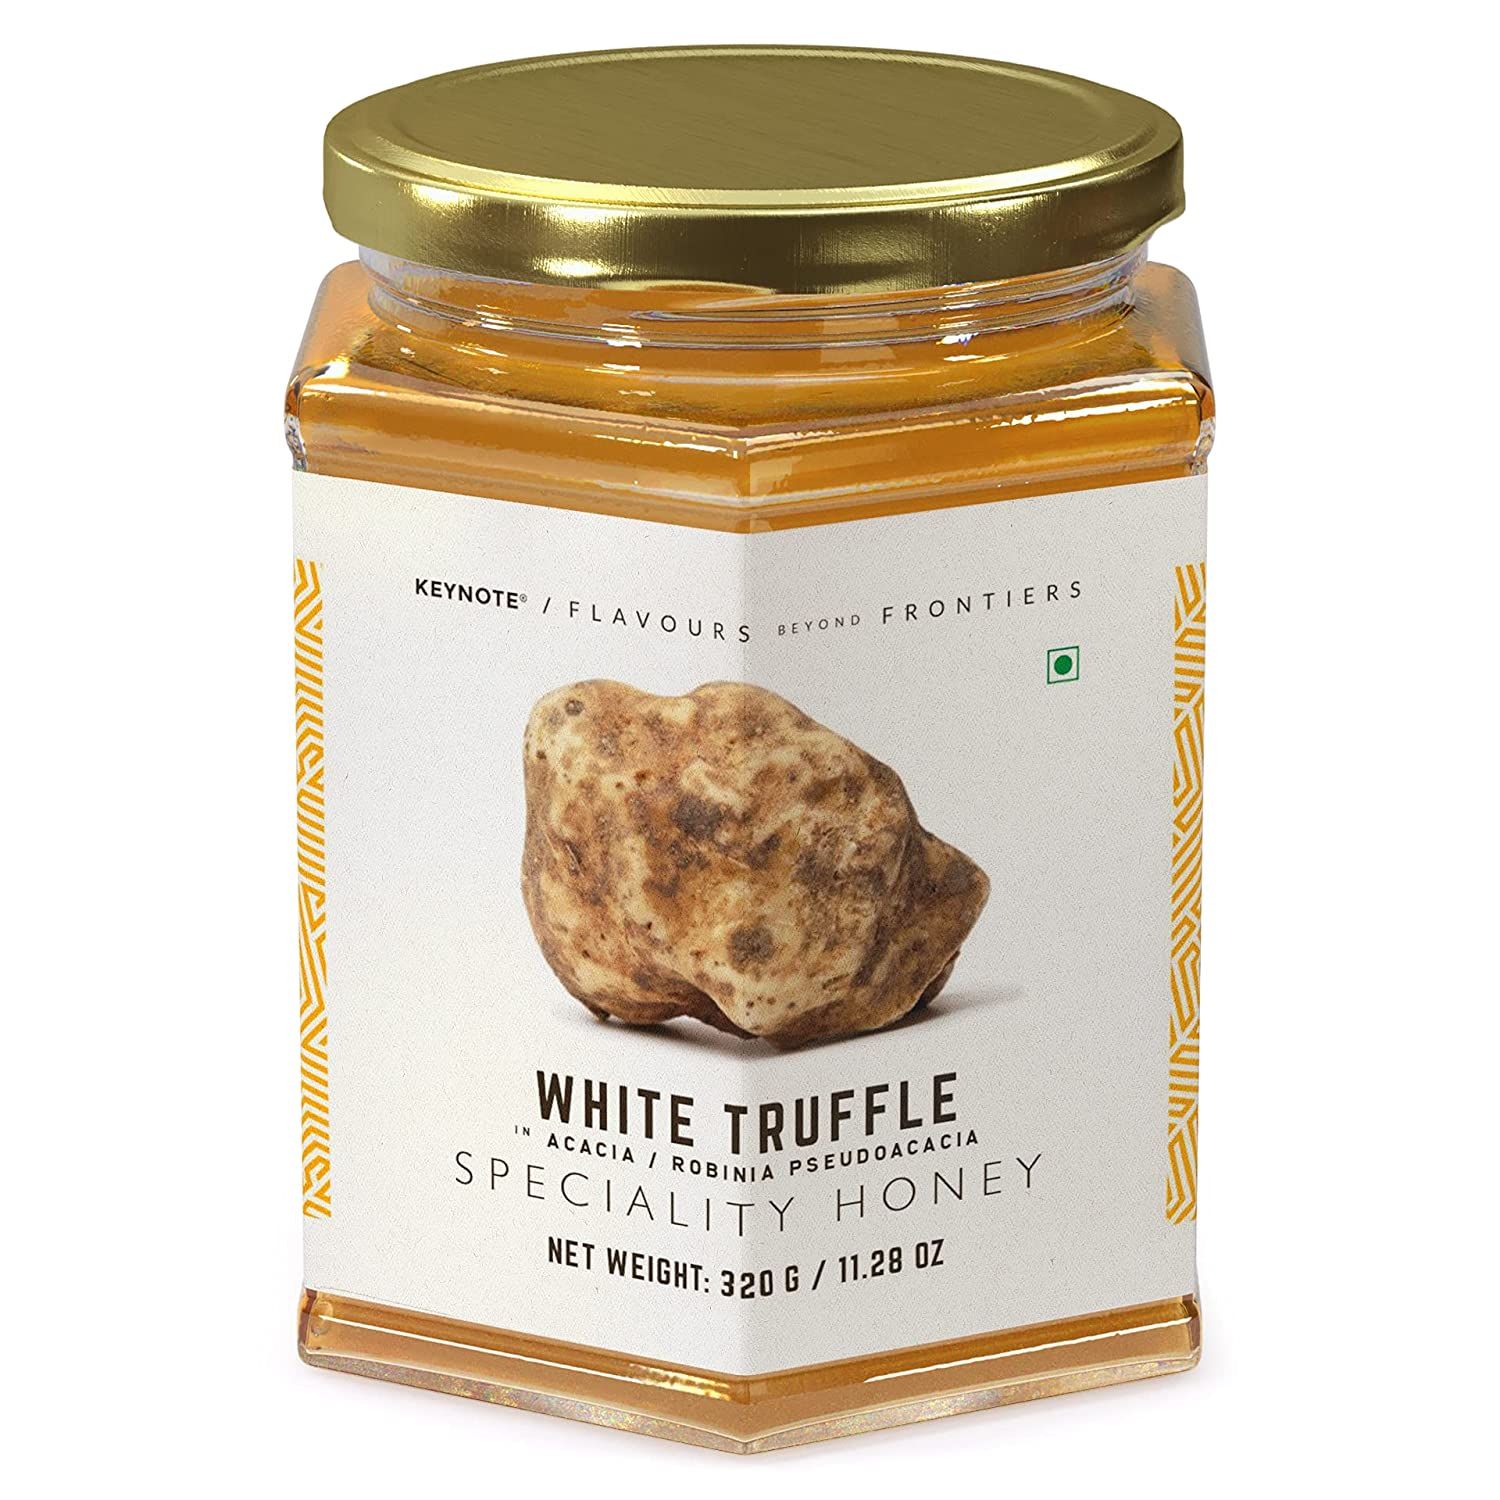 Keynote White Truffle Speciality Honey Image